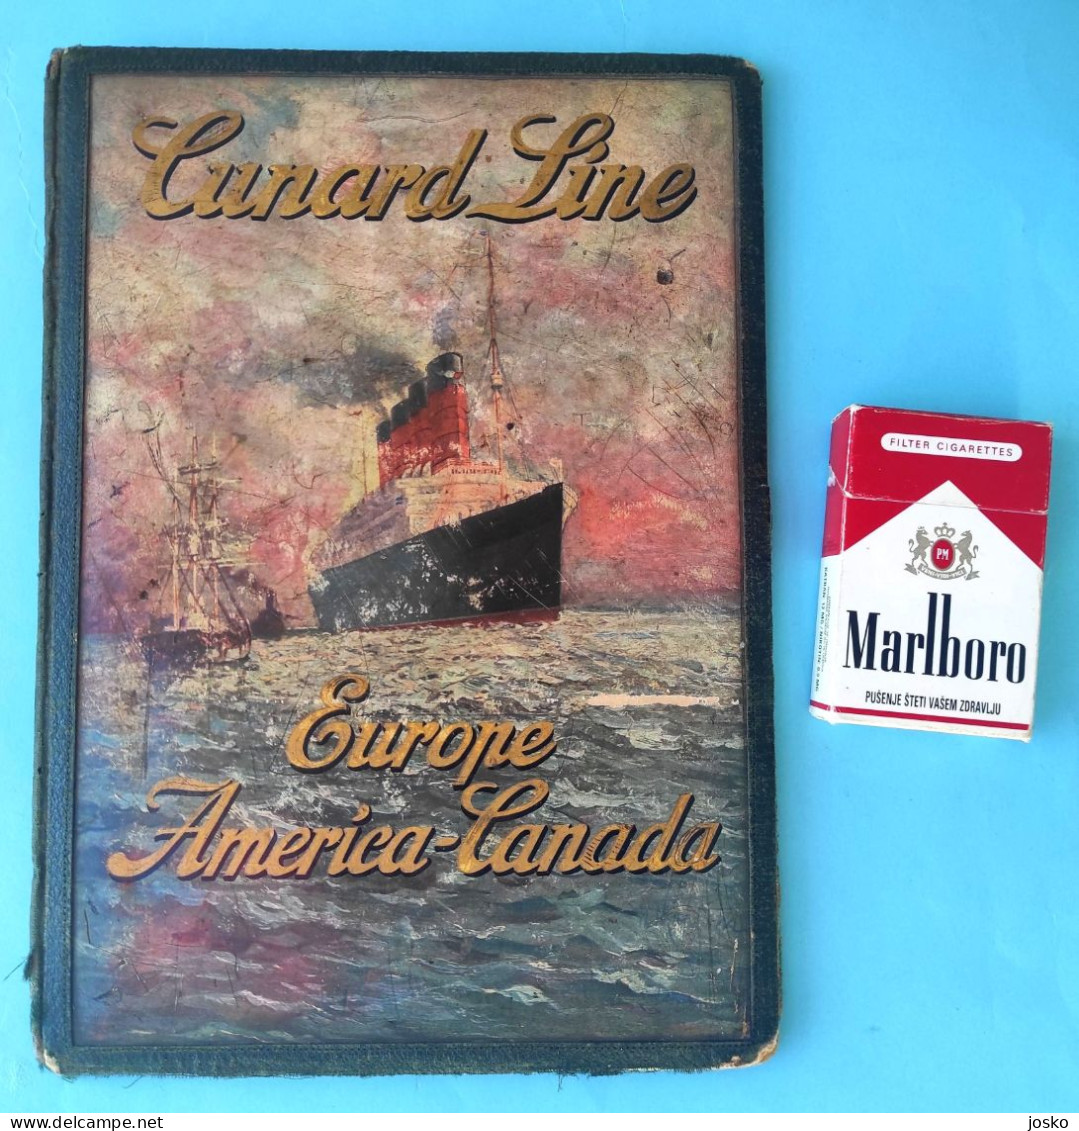 CUNARD LINE - EUROPE & AMERICA-CANADA ... beautifull original vintage writting pad (or official document case) RRRR